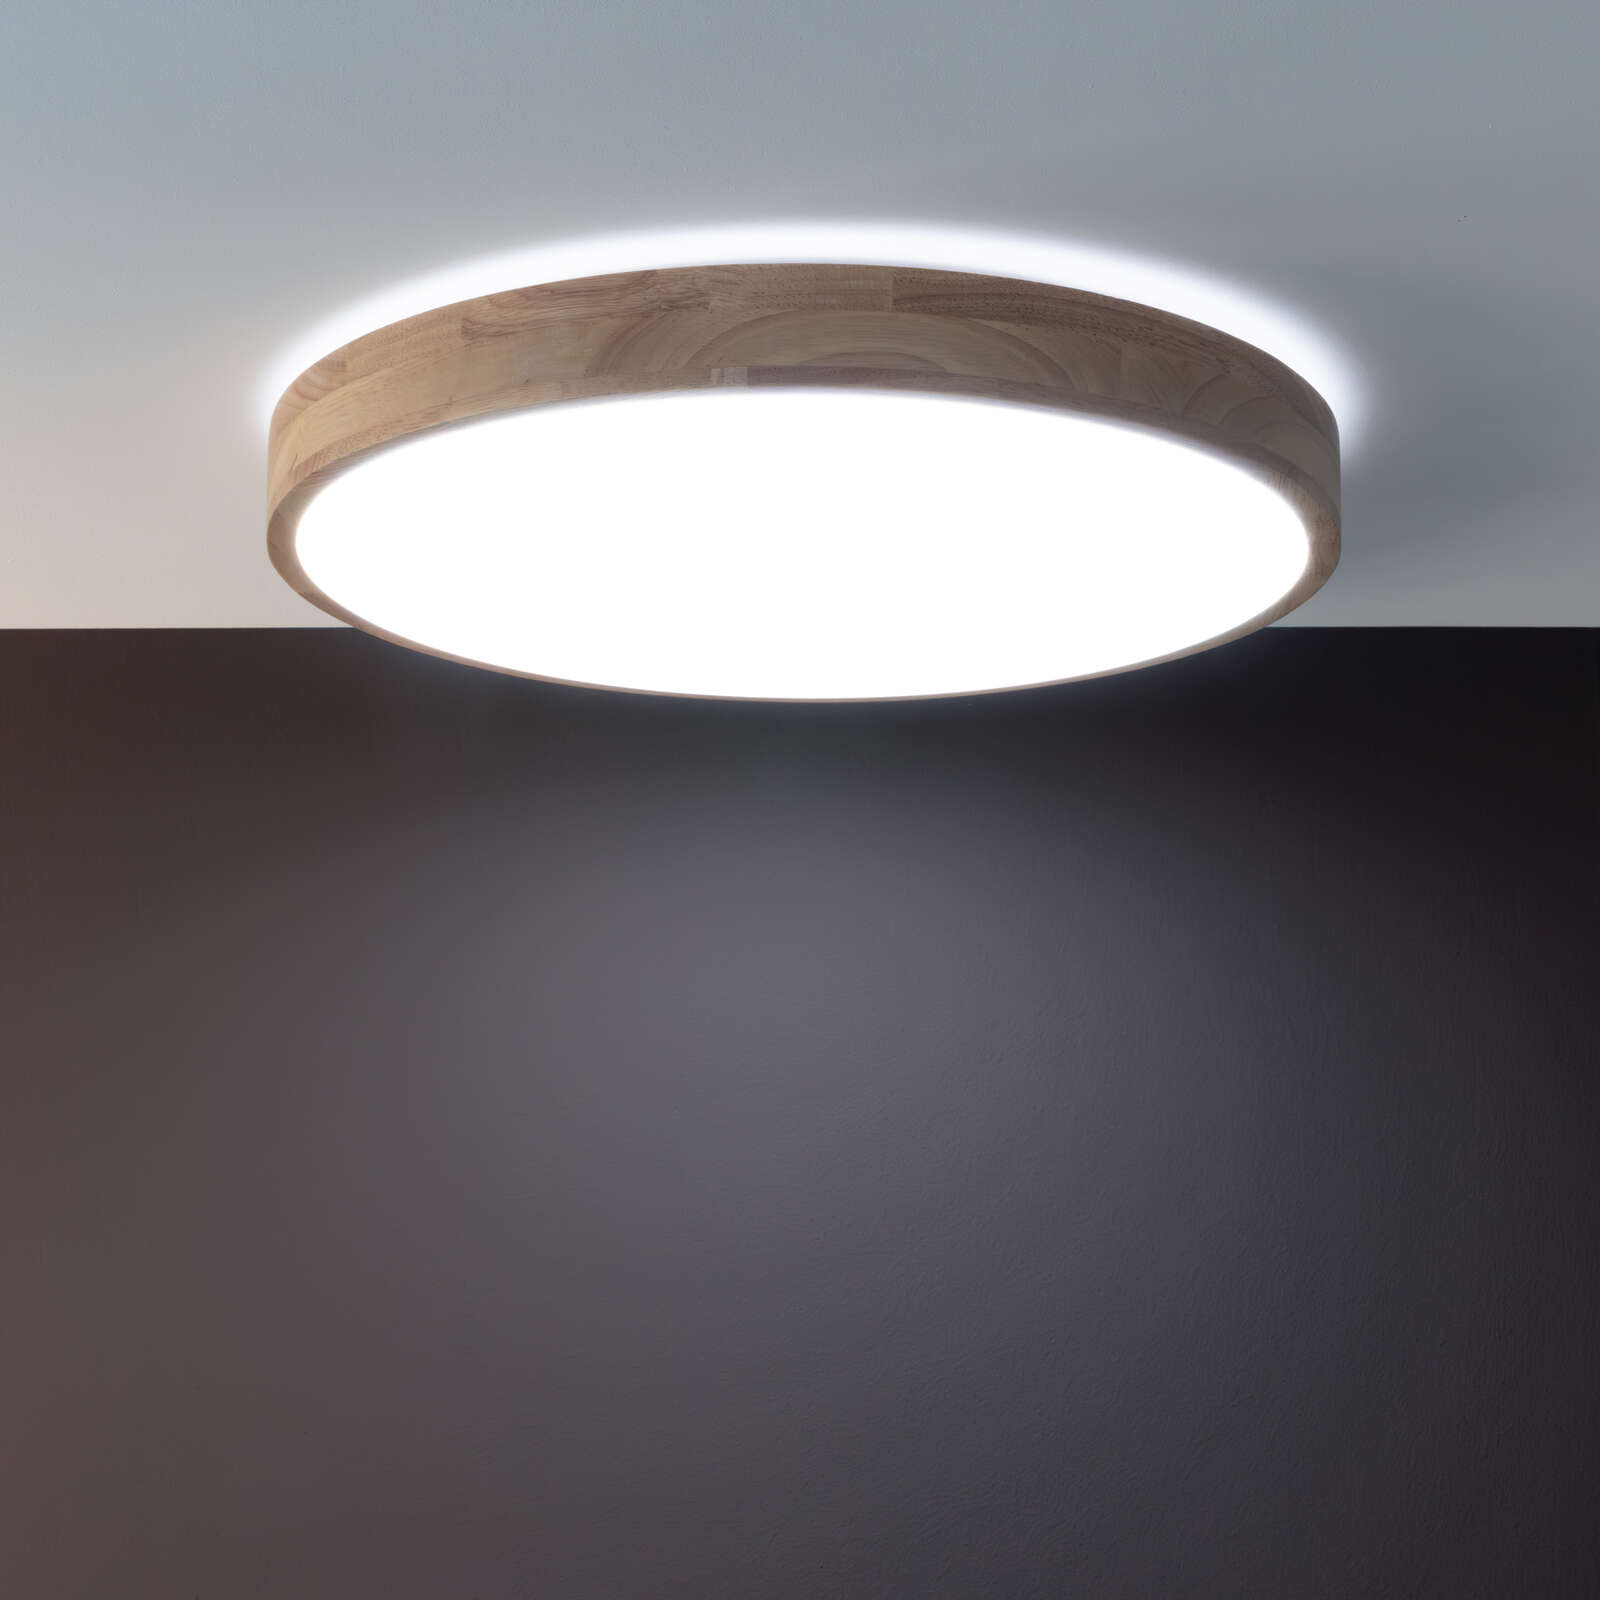             Plastic wall and ceiling light - Niklas 10 - Brown
        